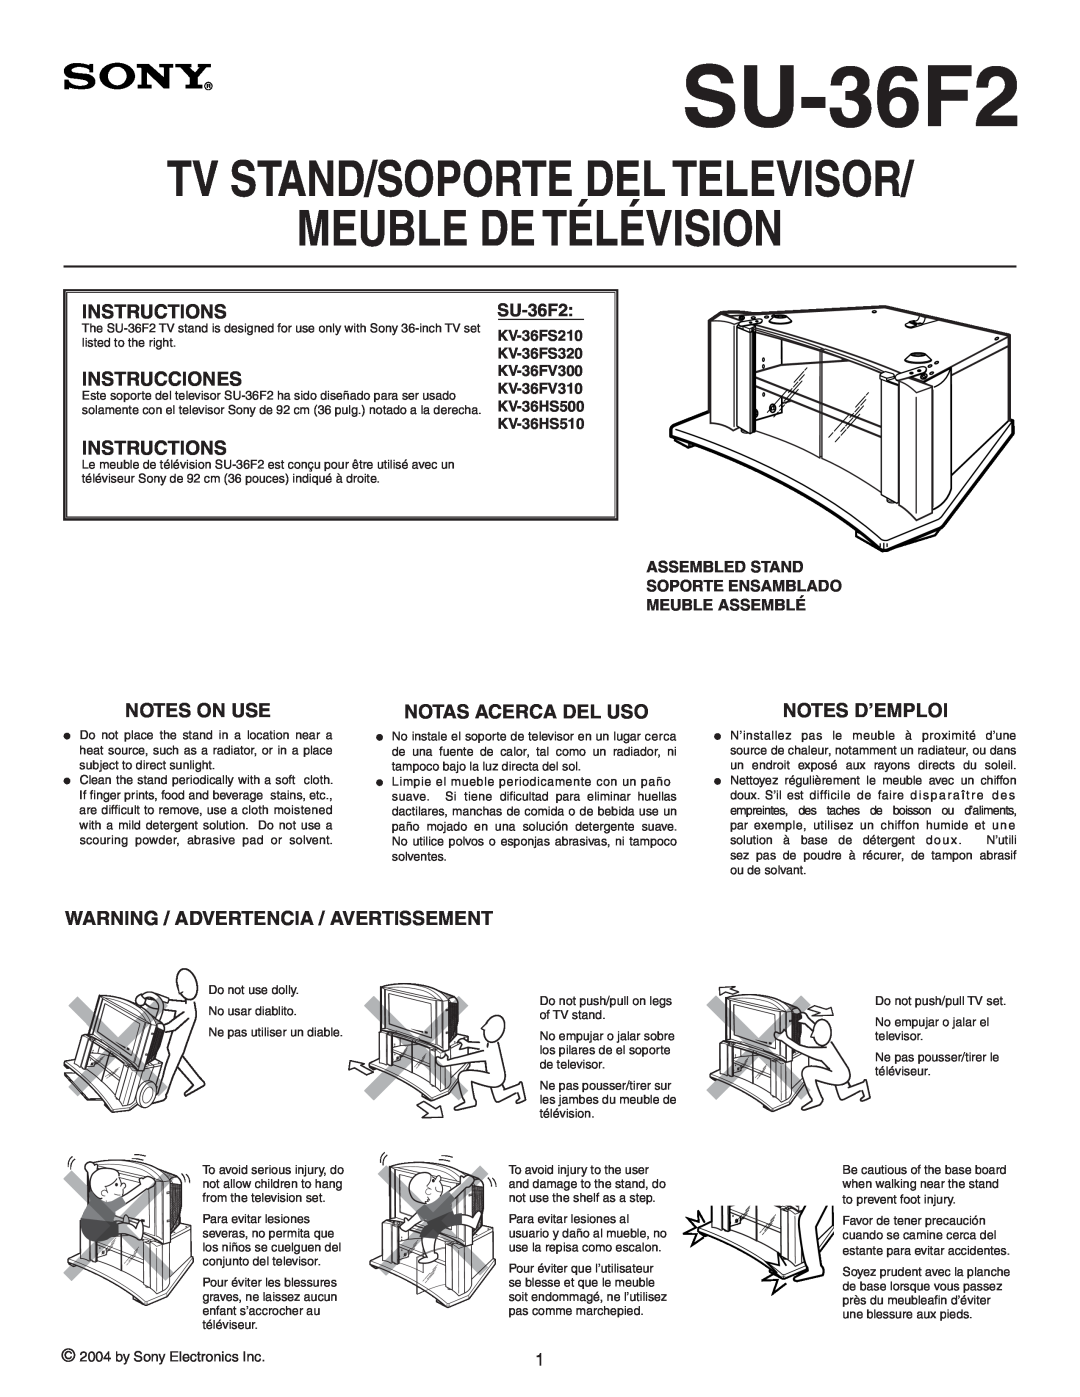 Sony SU-36F2 manual Meuble De Télévision, Tv Stand/Soporte Del Televisor, Instructions, Instrucciones, Notes On Use 